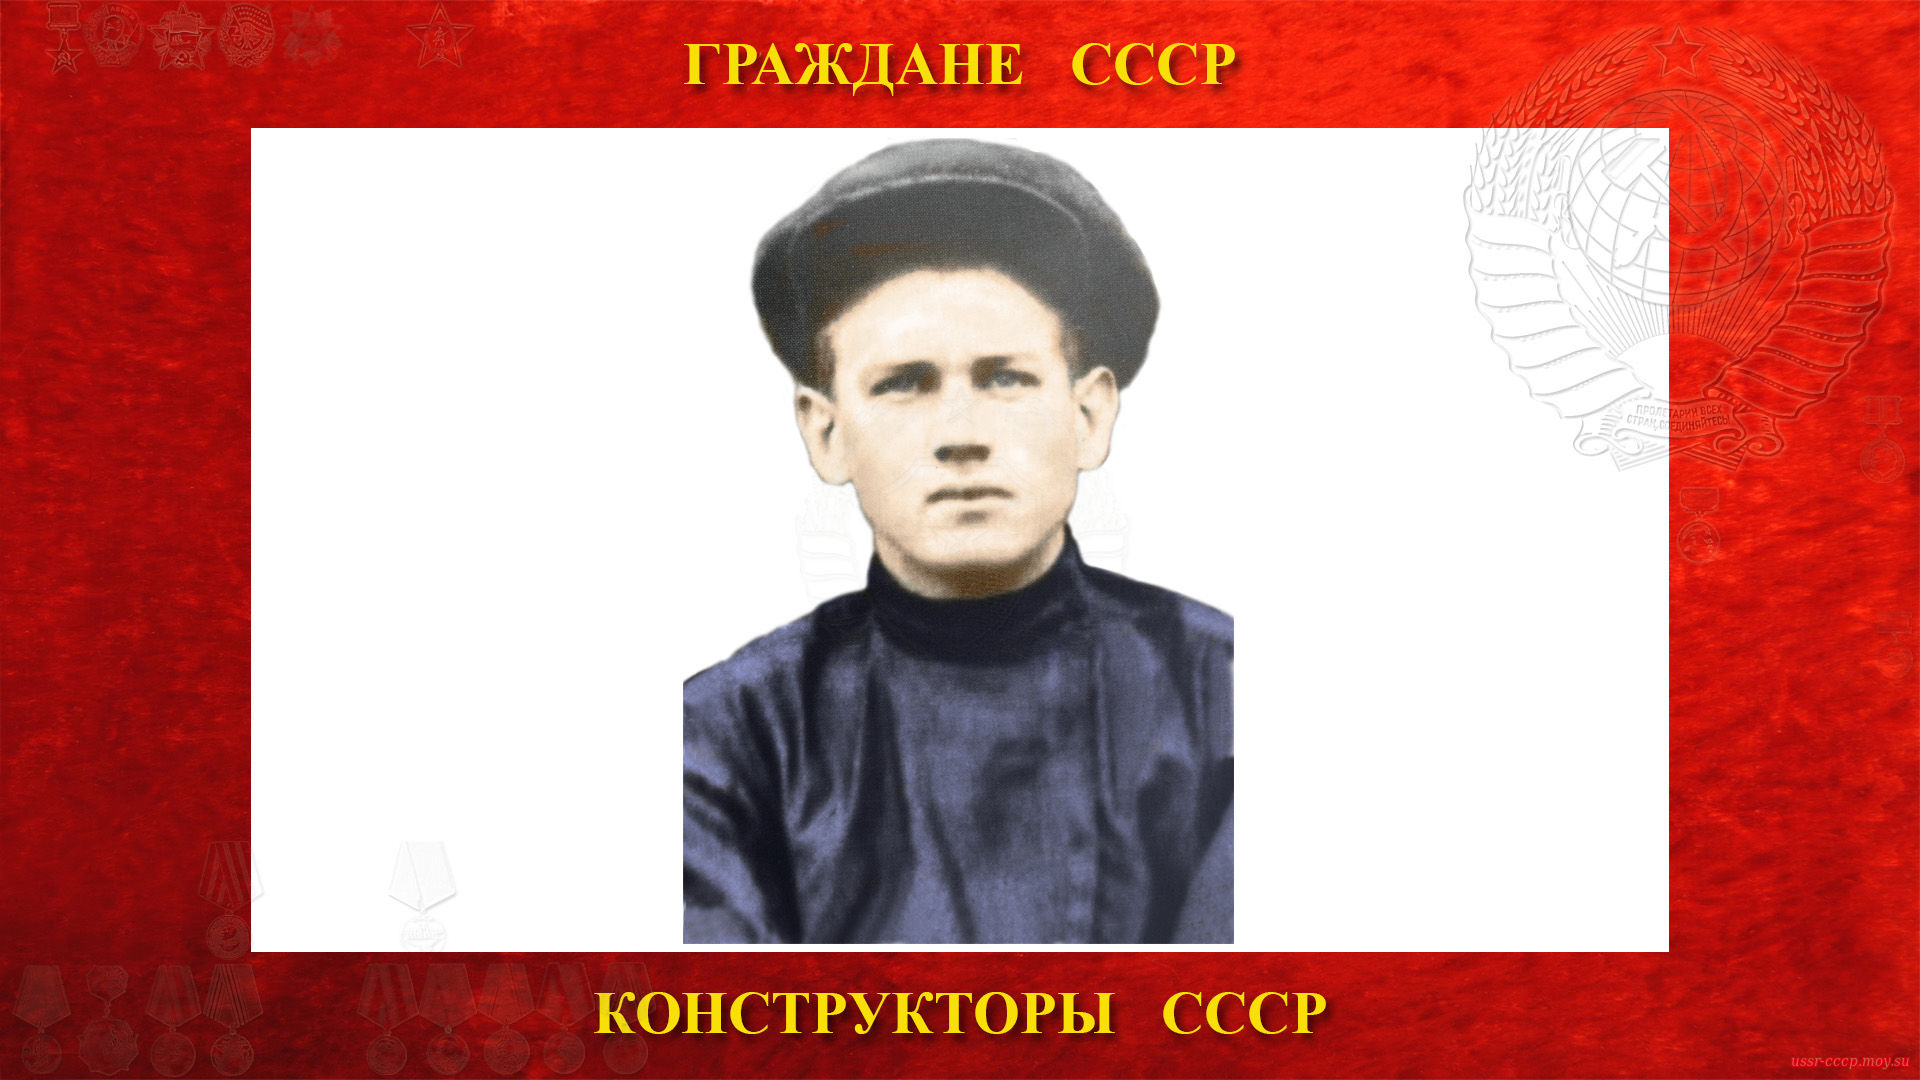 Кузнецов Николай Дмитриевич